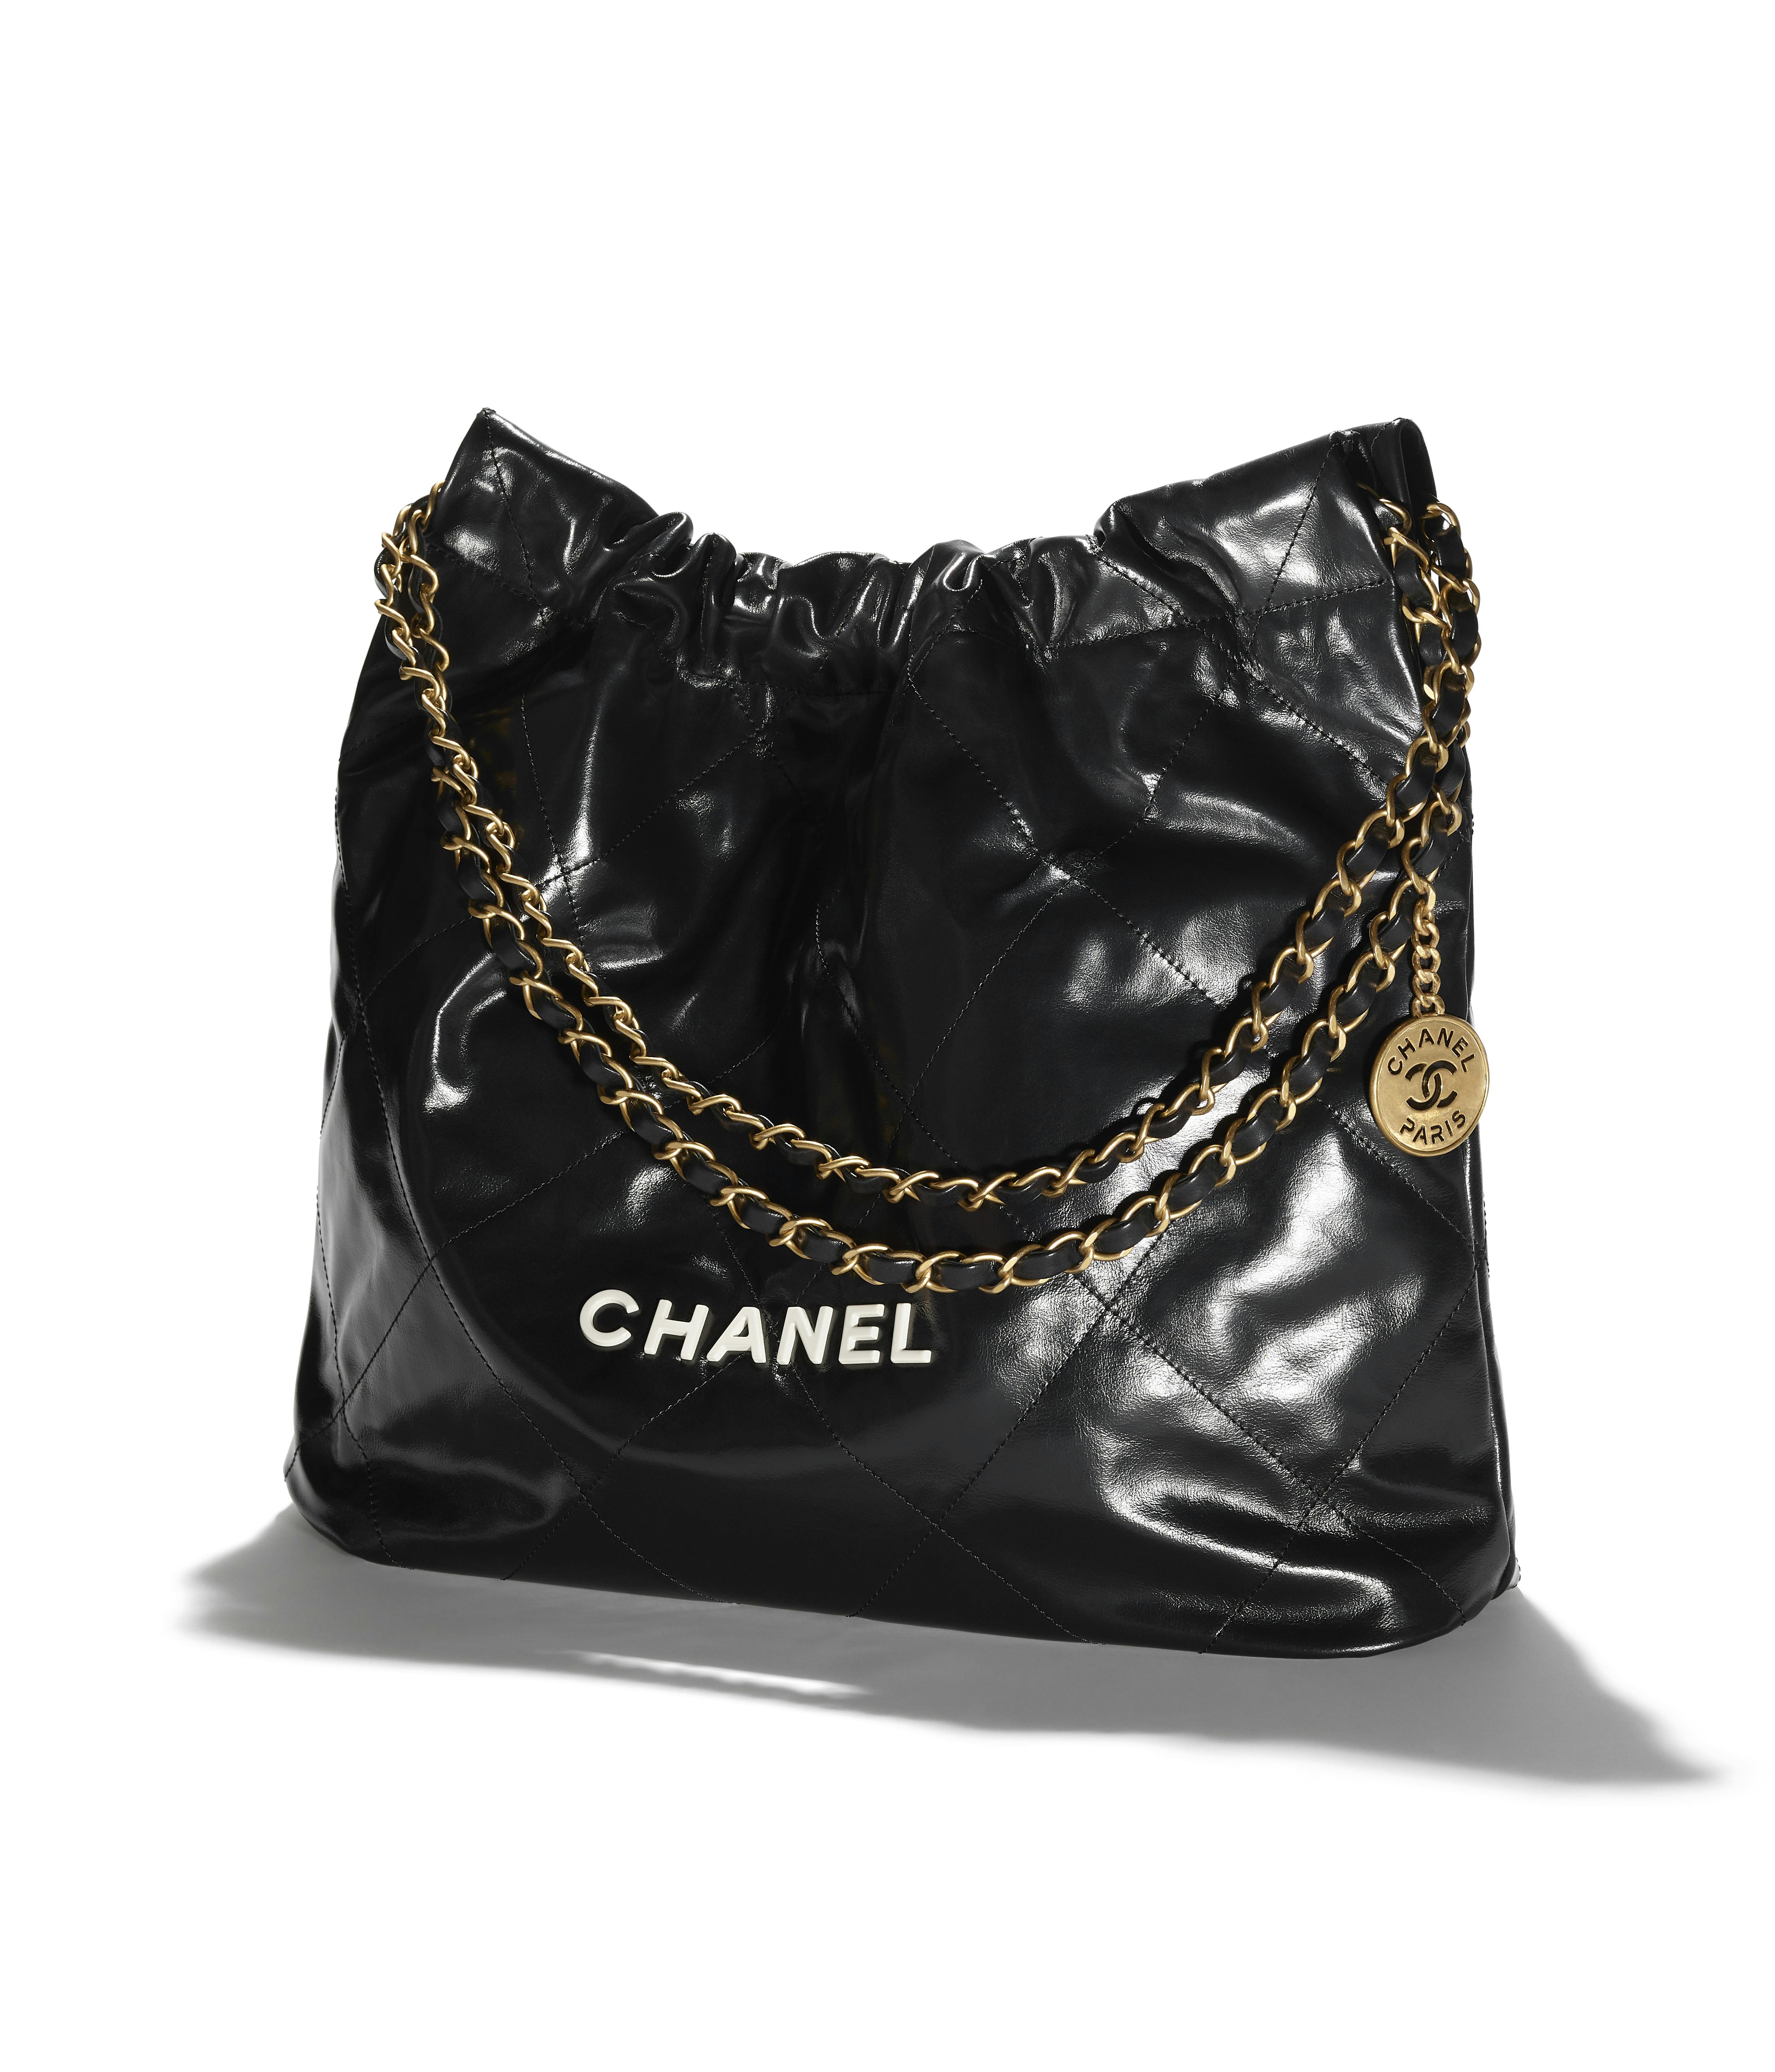 Chanel 22 leather handbag Chanel Black in Leather - 36551517